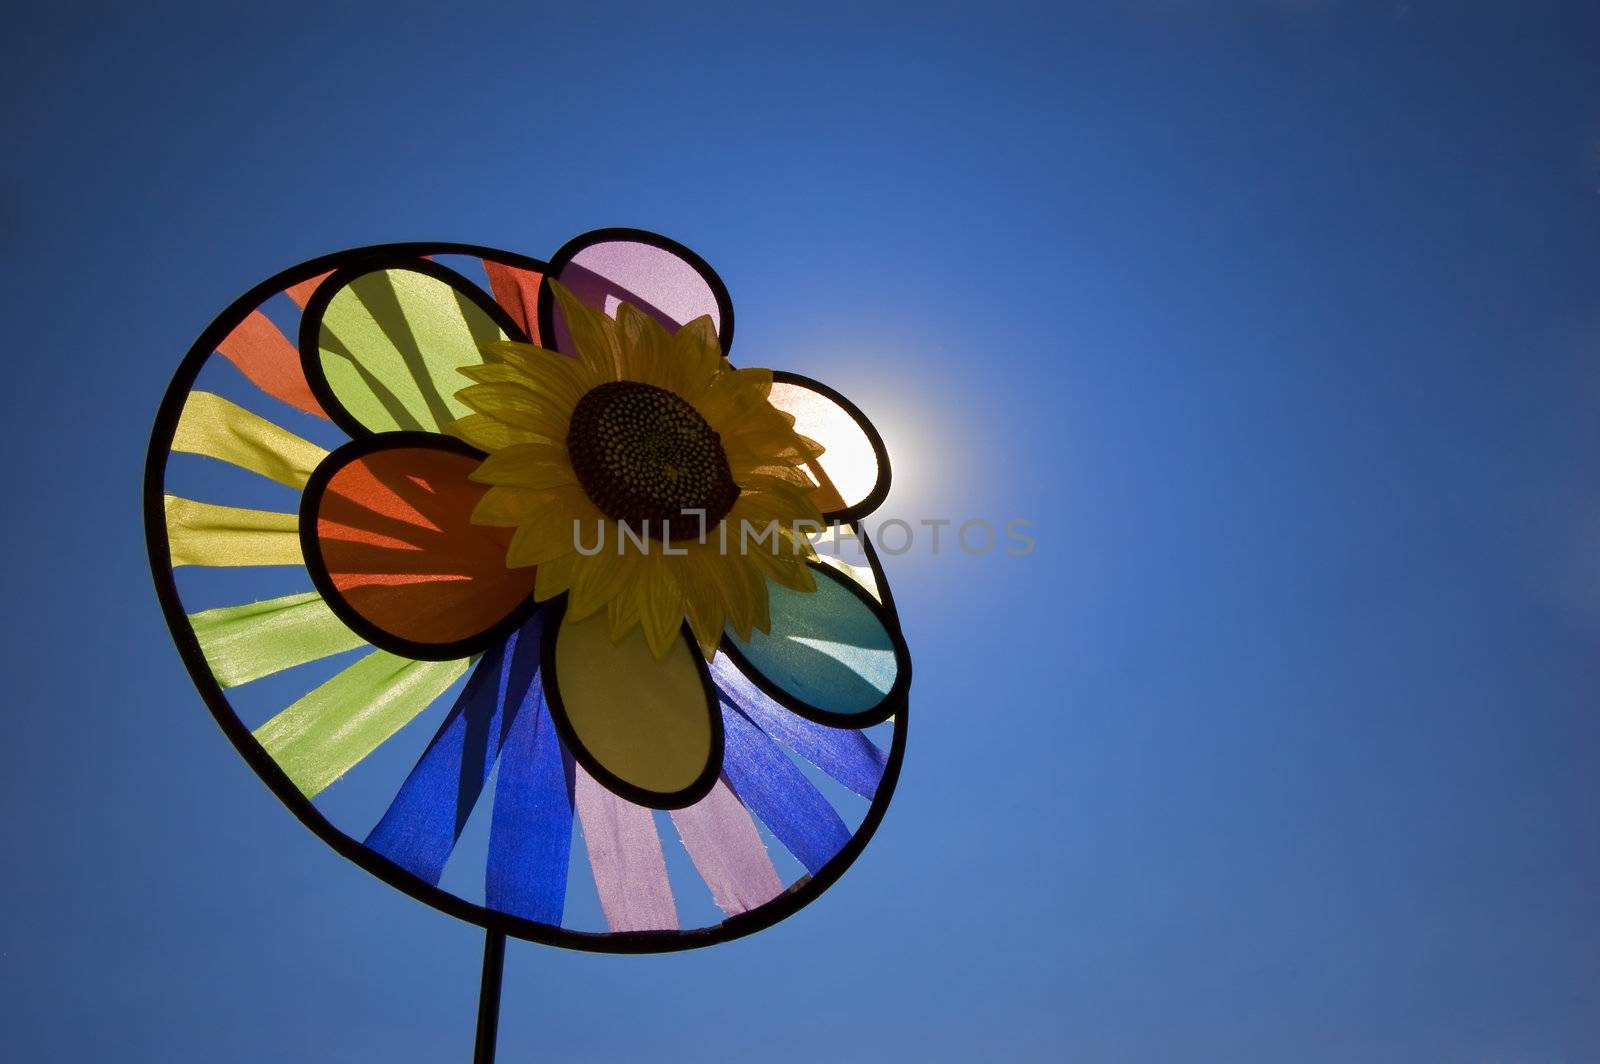 A pinwheel in the blue sky